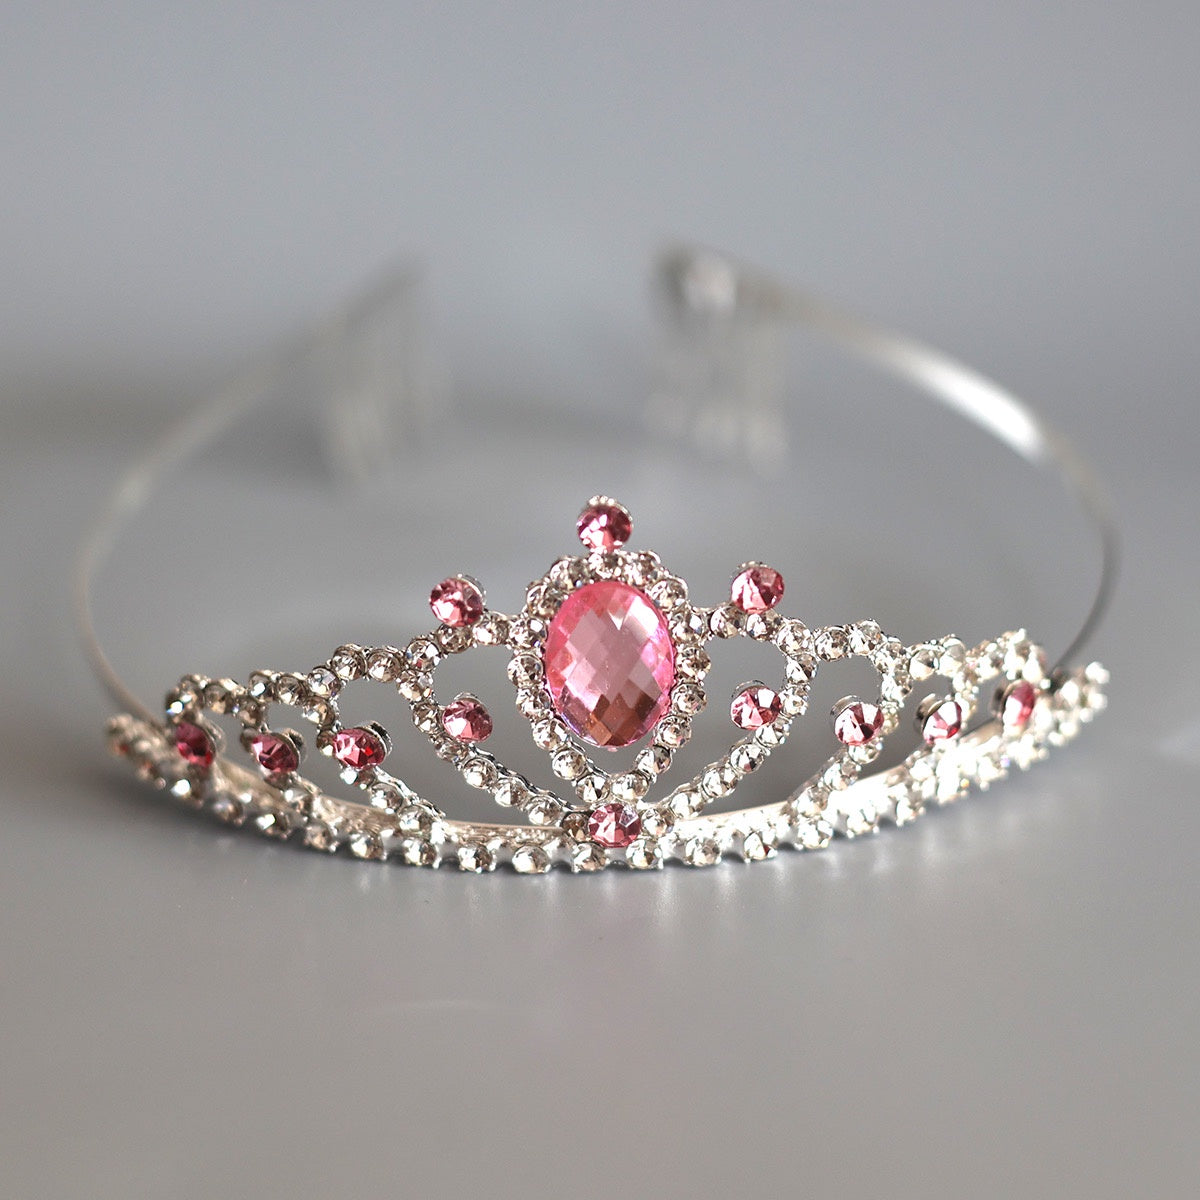 Dimante Tiara - Tiara Silver With Pink Diamante